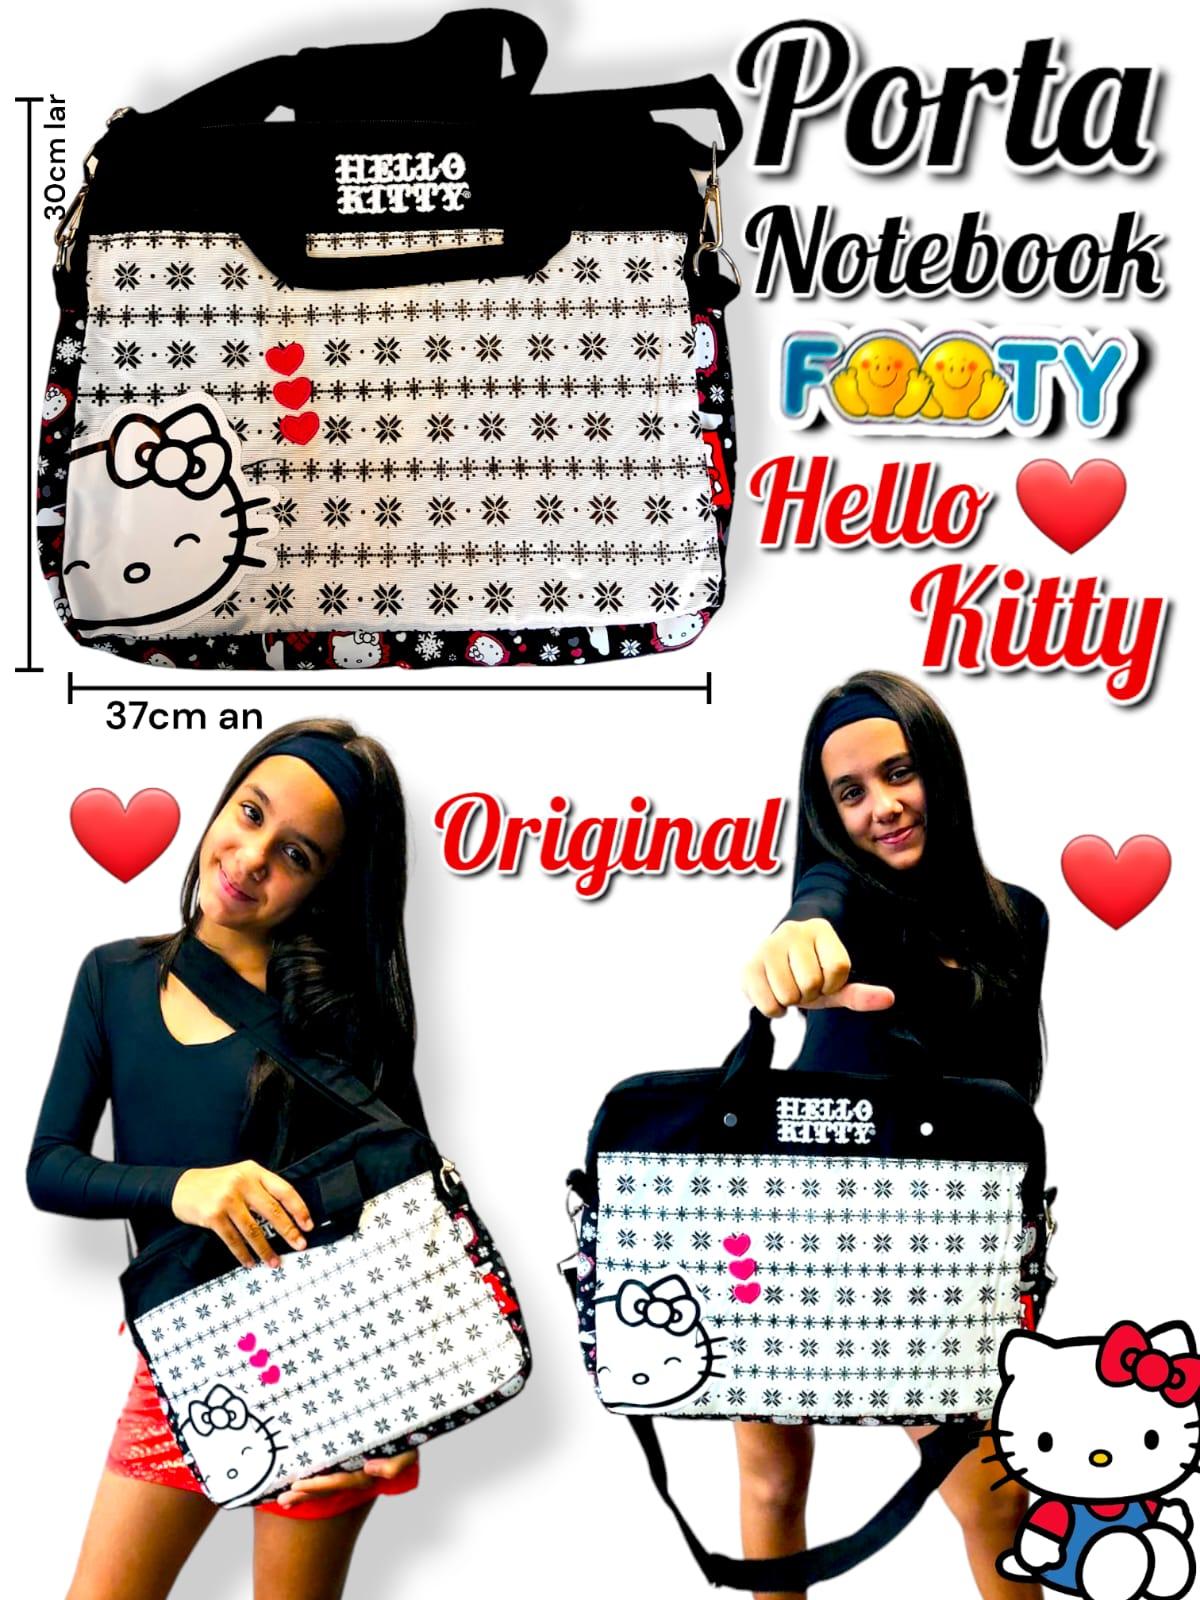 Porta Notebook marca Footy Hello Kitty original